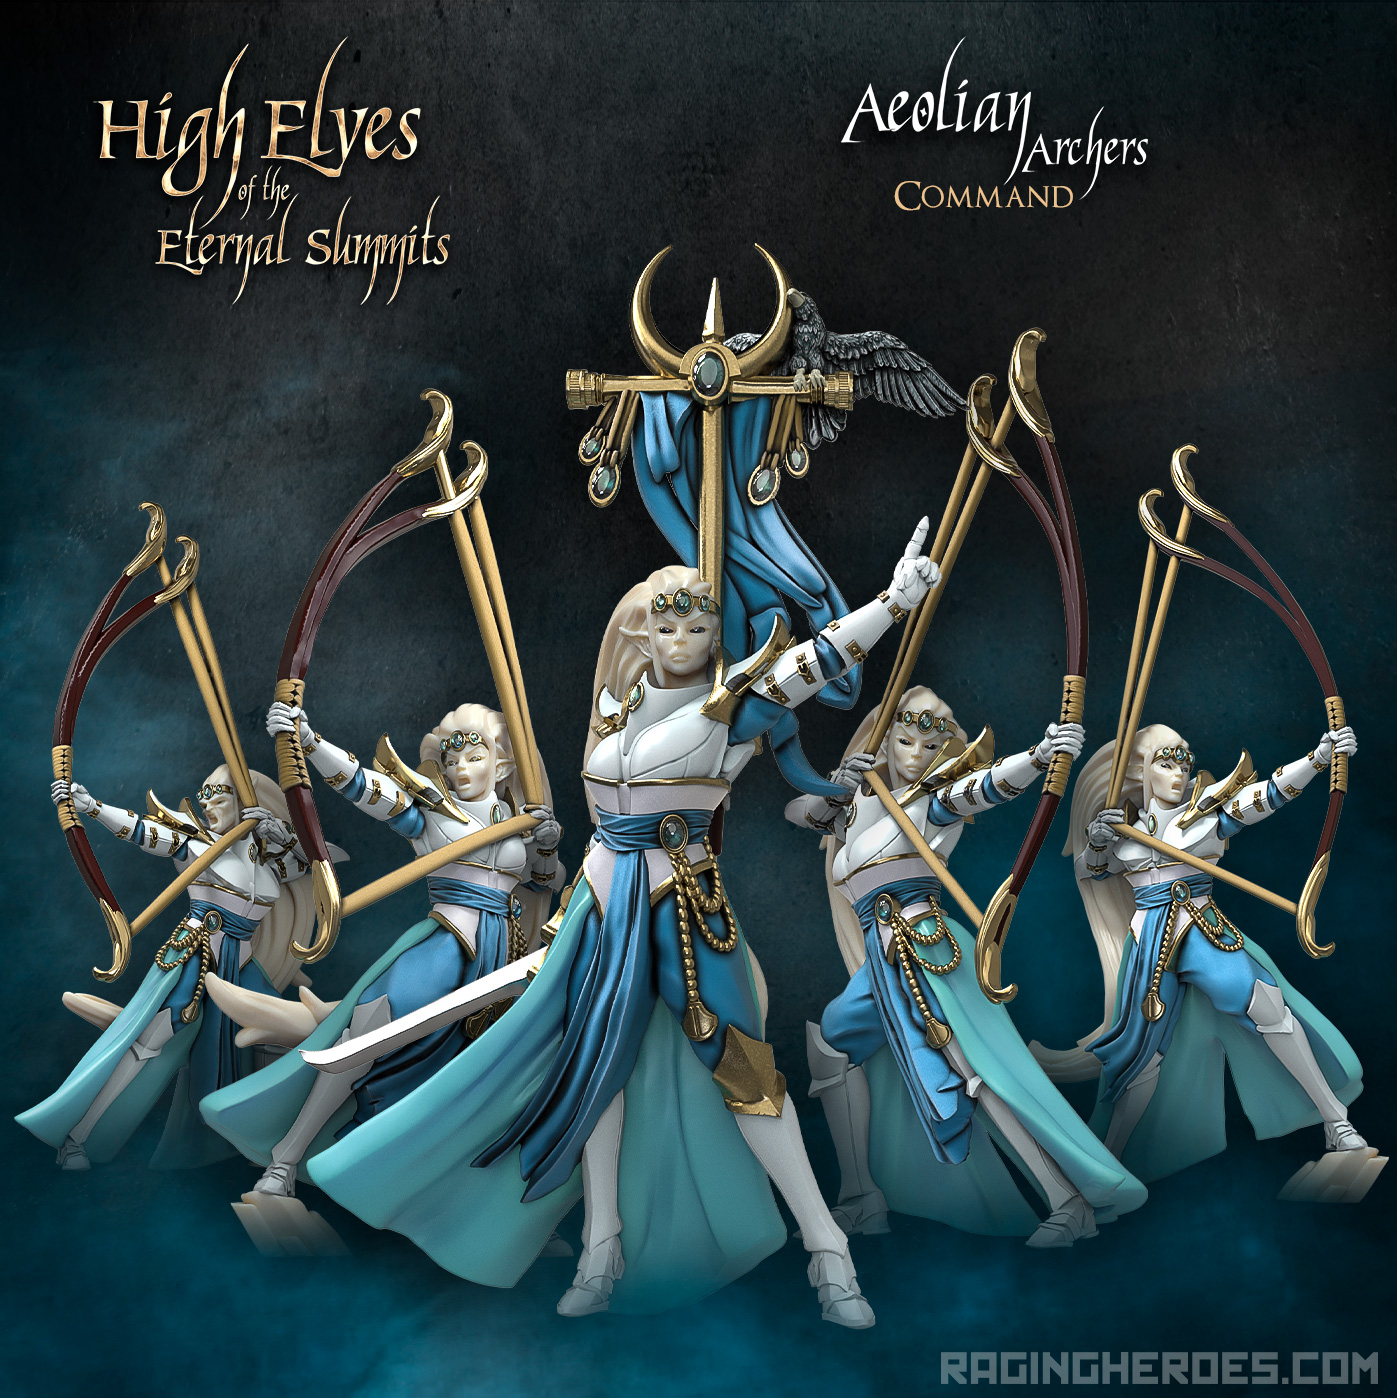 Aeolian Archers Command - Raging Heroes